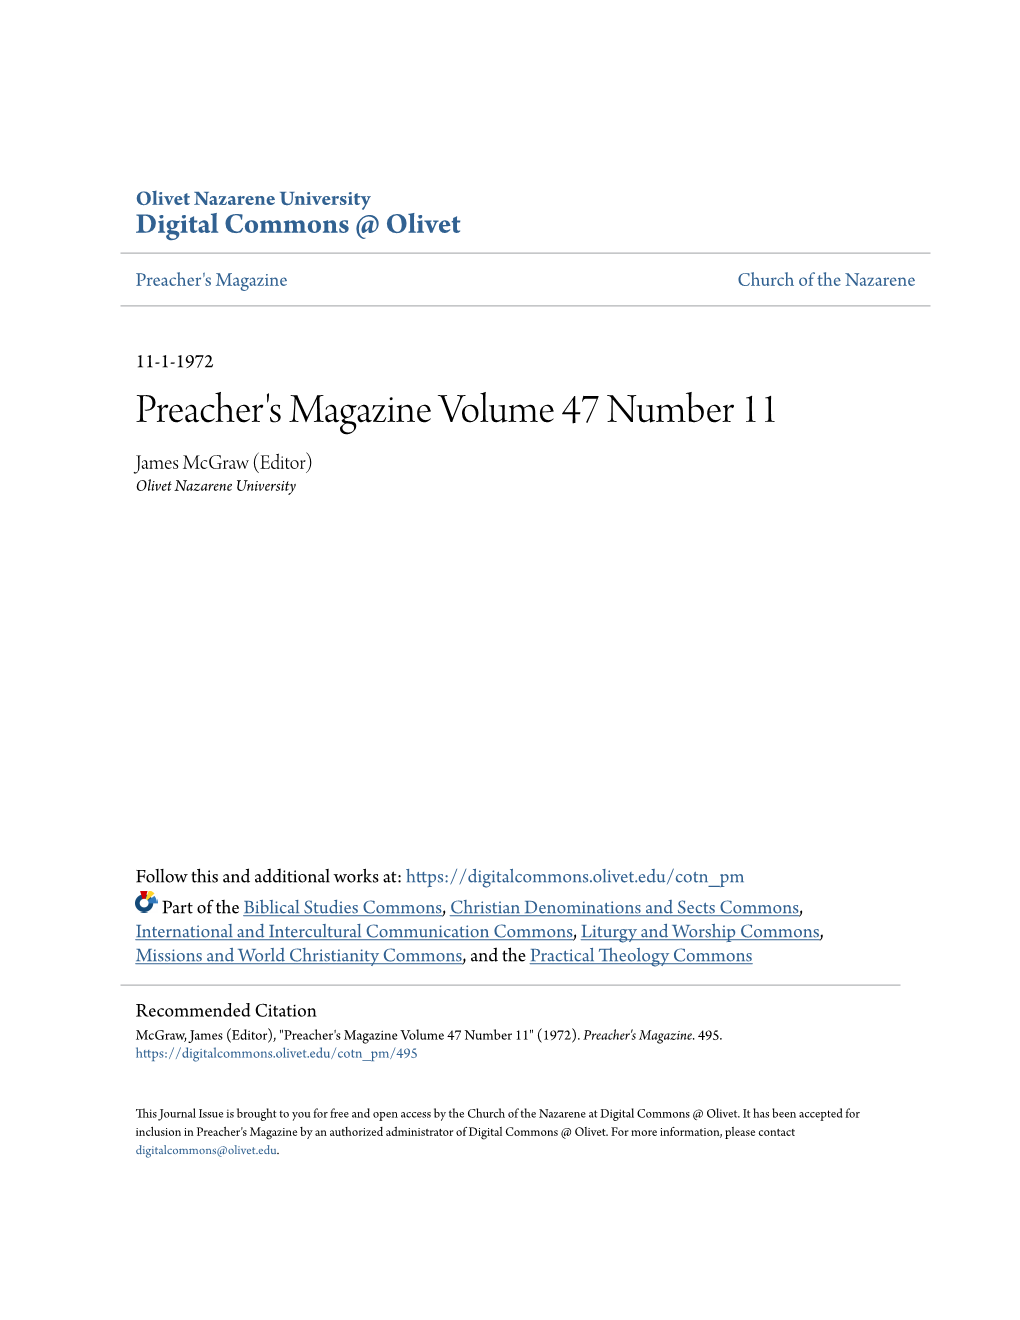 Preacher's Magazine Volume 47 Number 11 James Mcgraw (Editor) Olivet Nazarene University